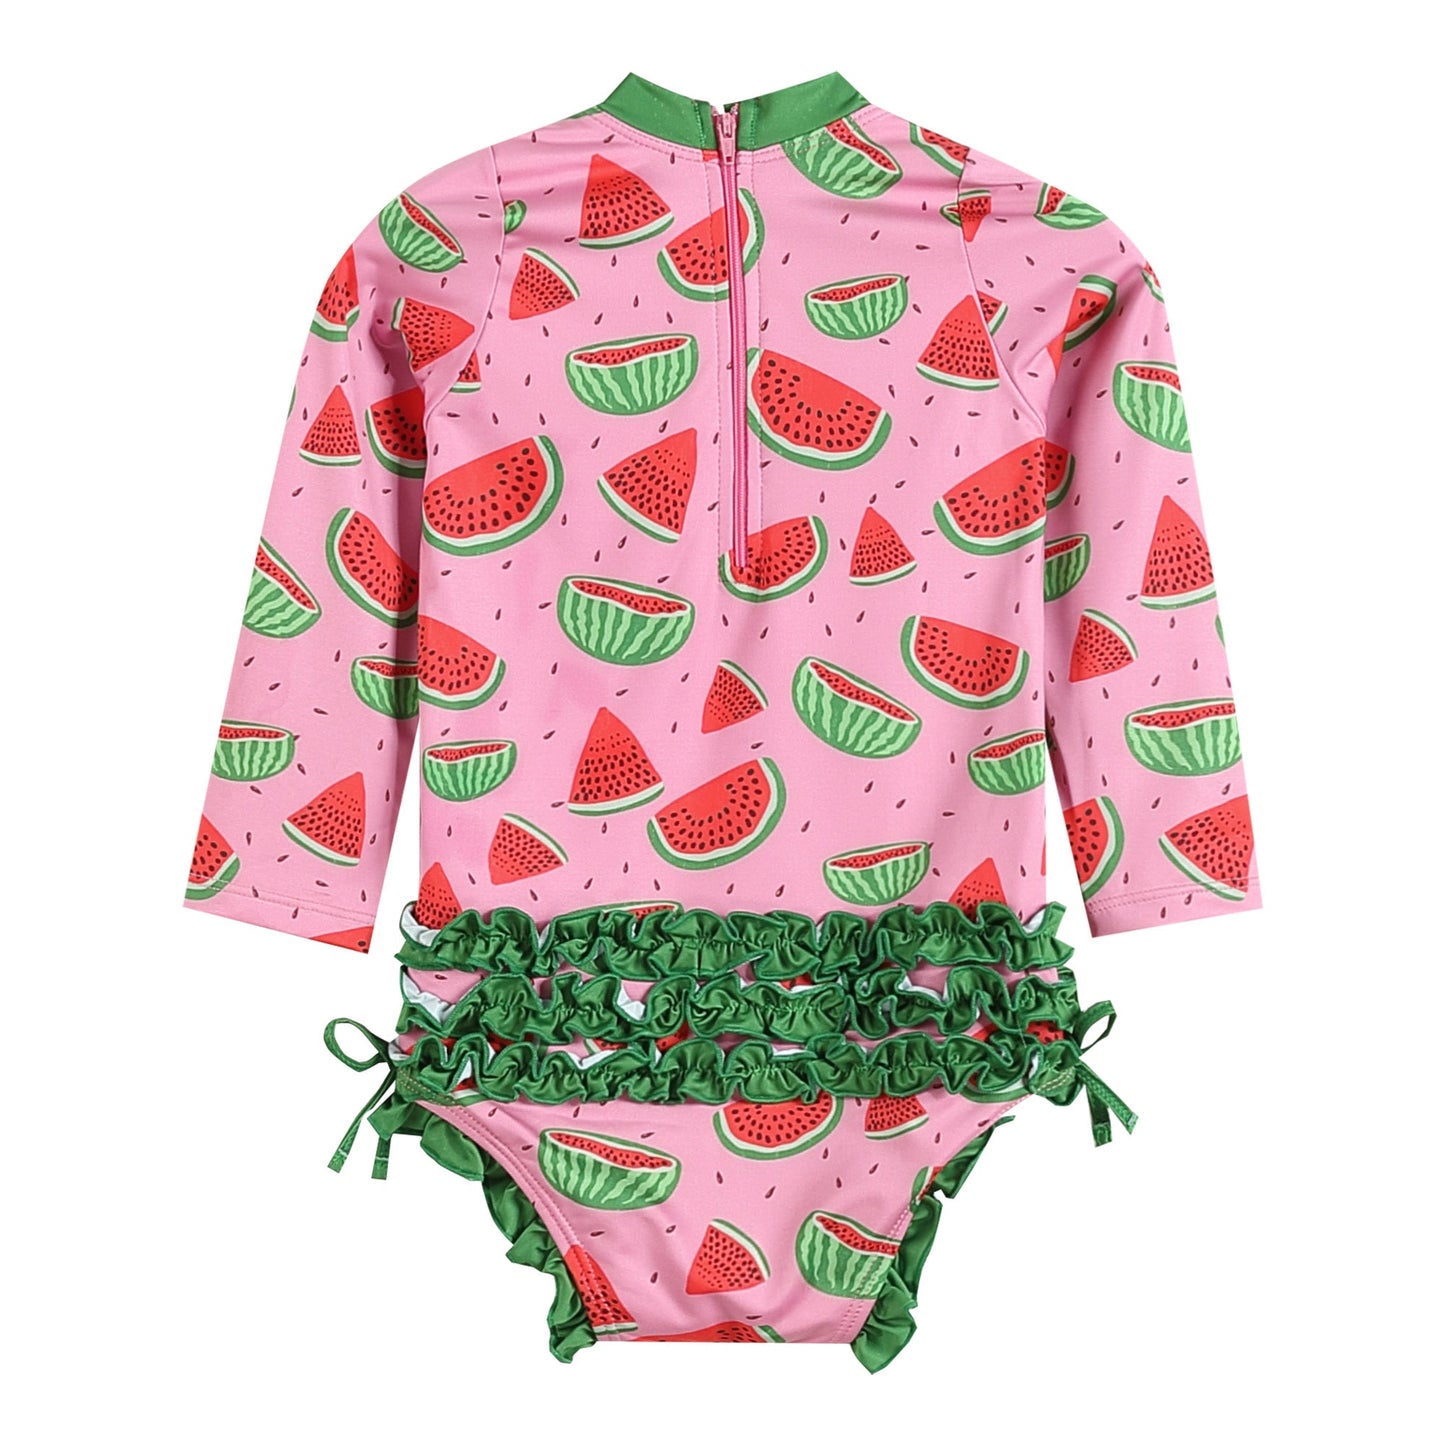 Watermelon Long Sleeve Ruffle Swimsuit